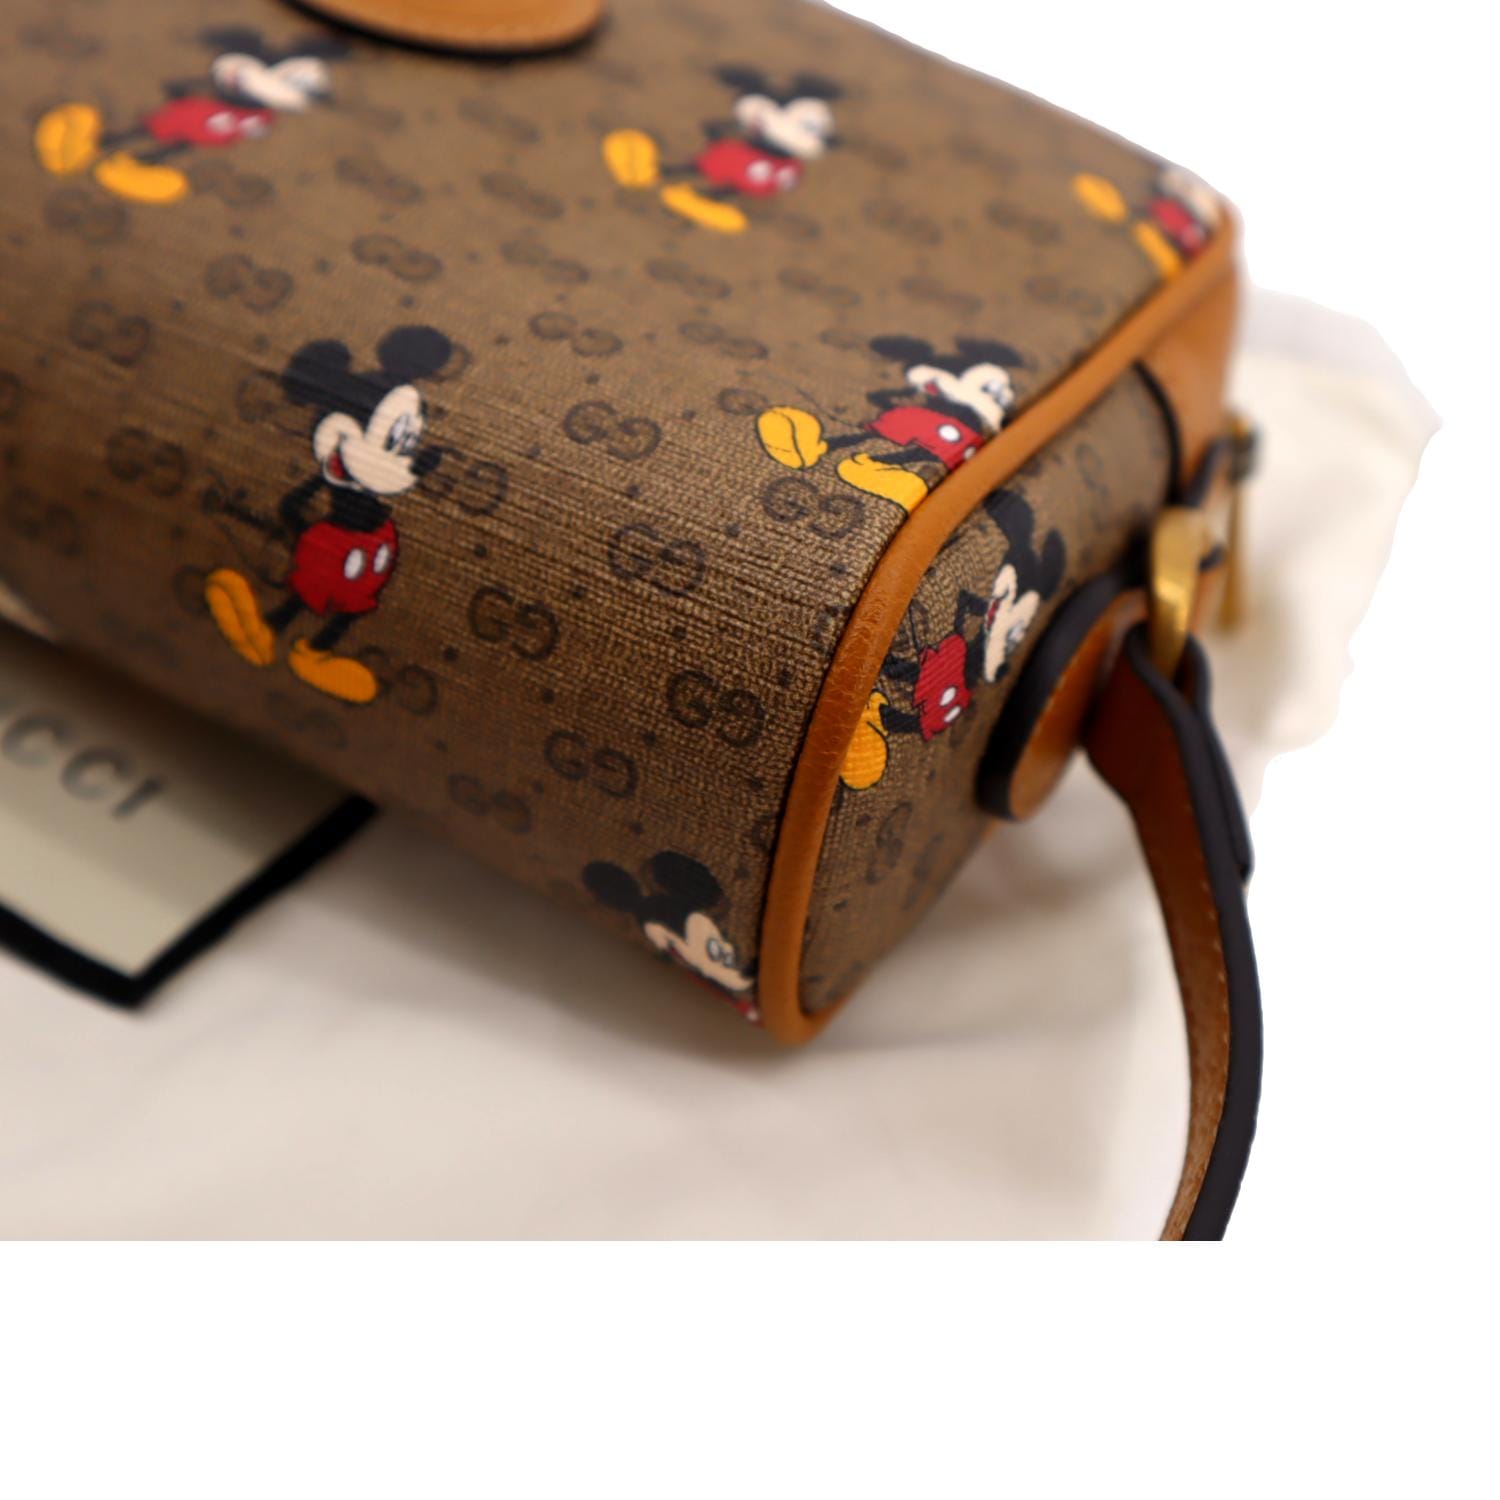 Gucci Disney Collaboration Micro GG Shoulder Bag Mickey Mouse